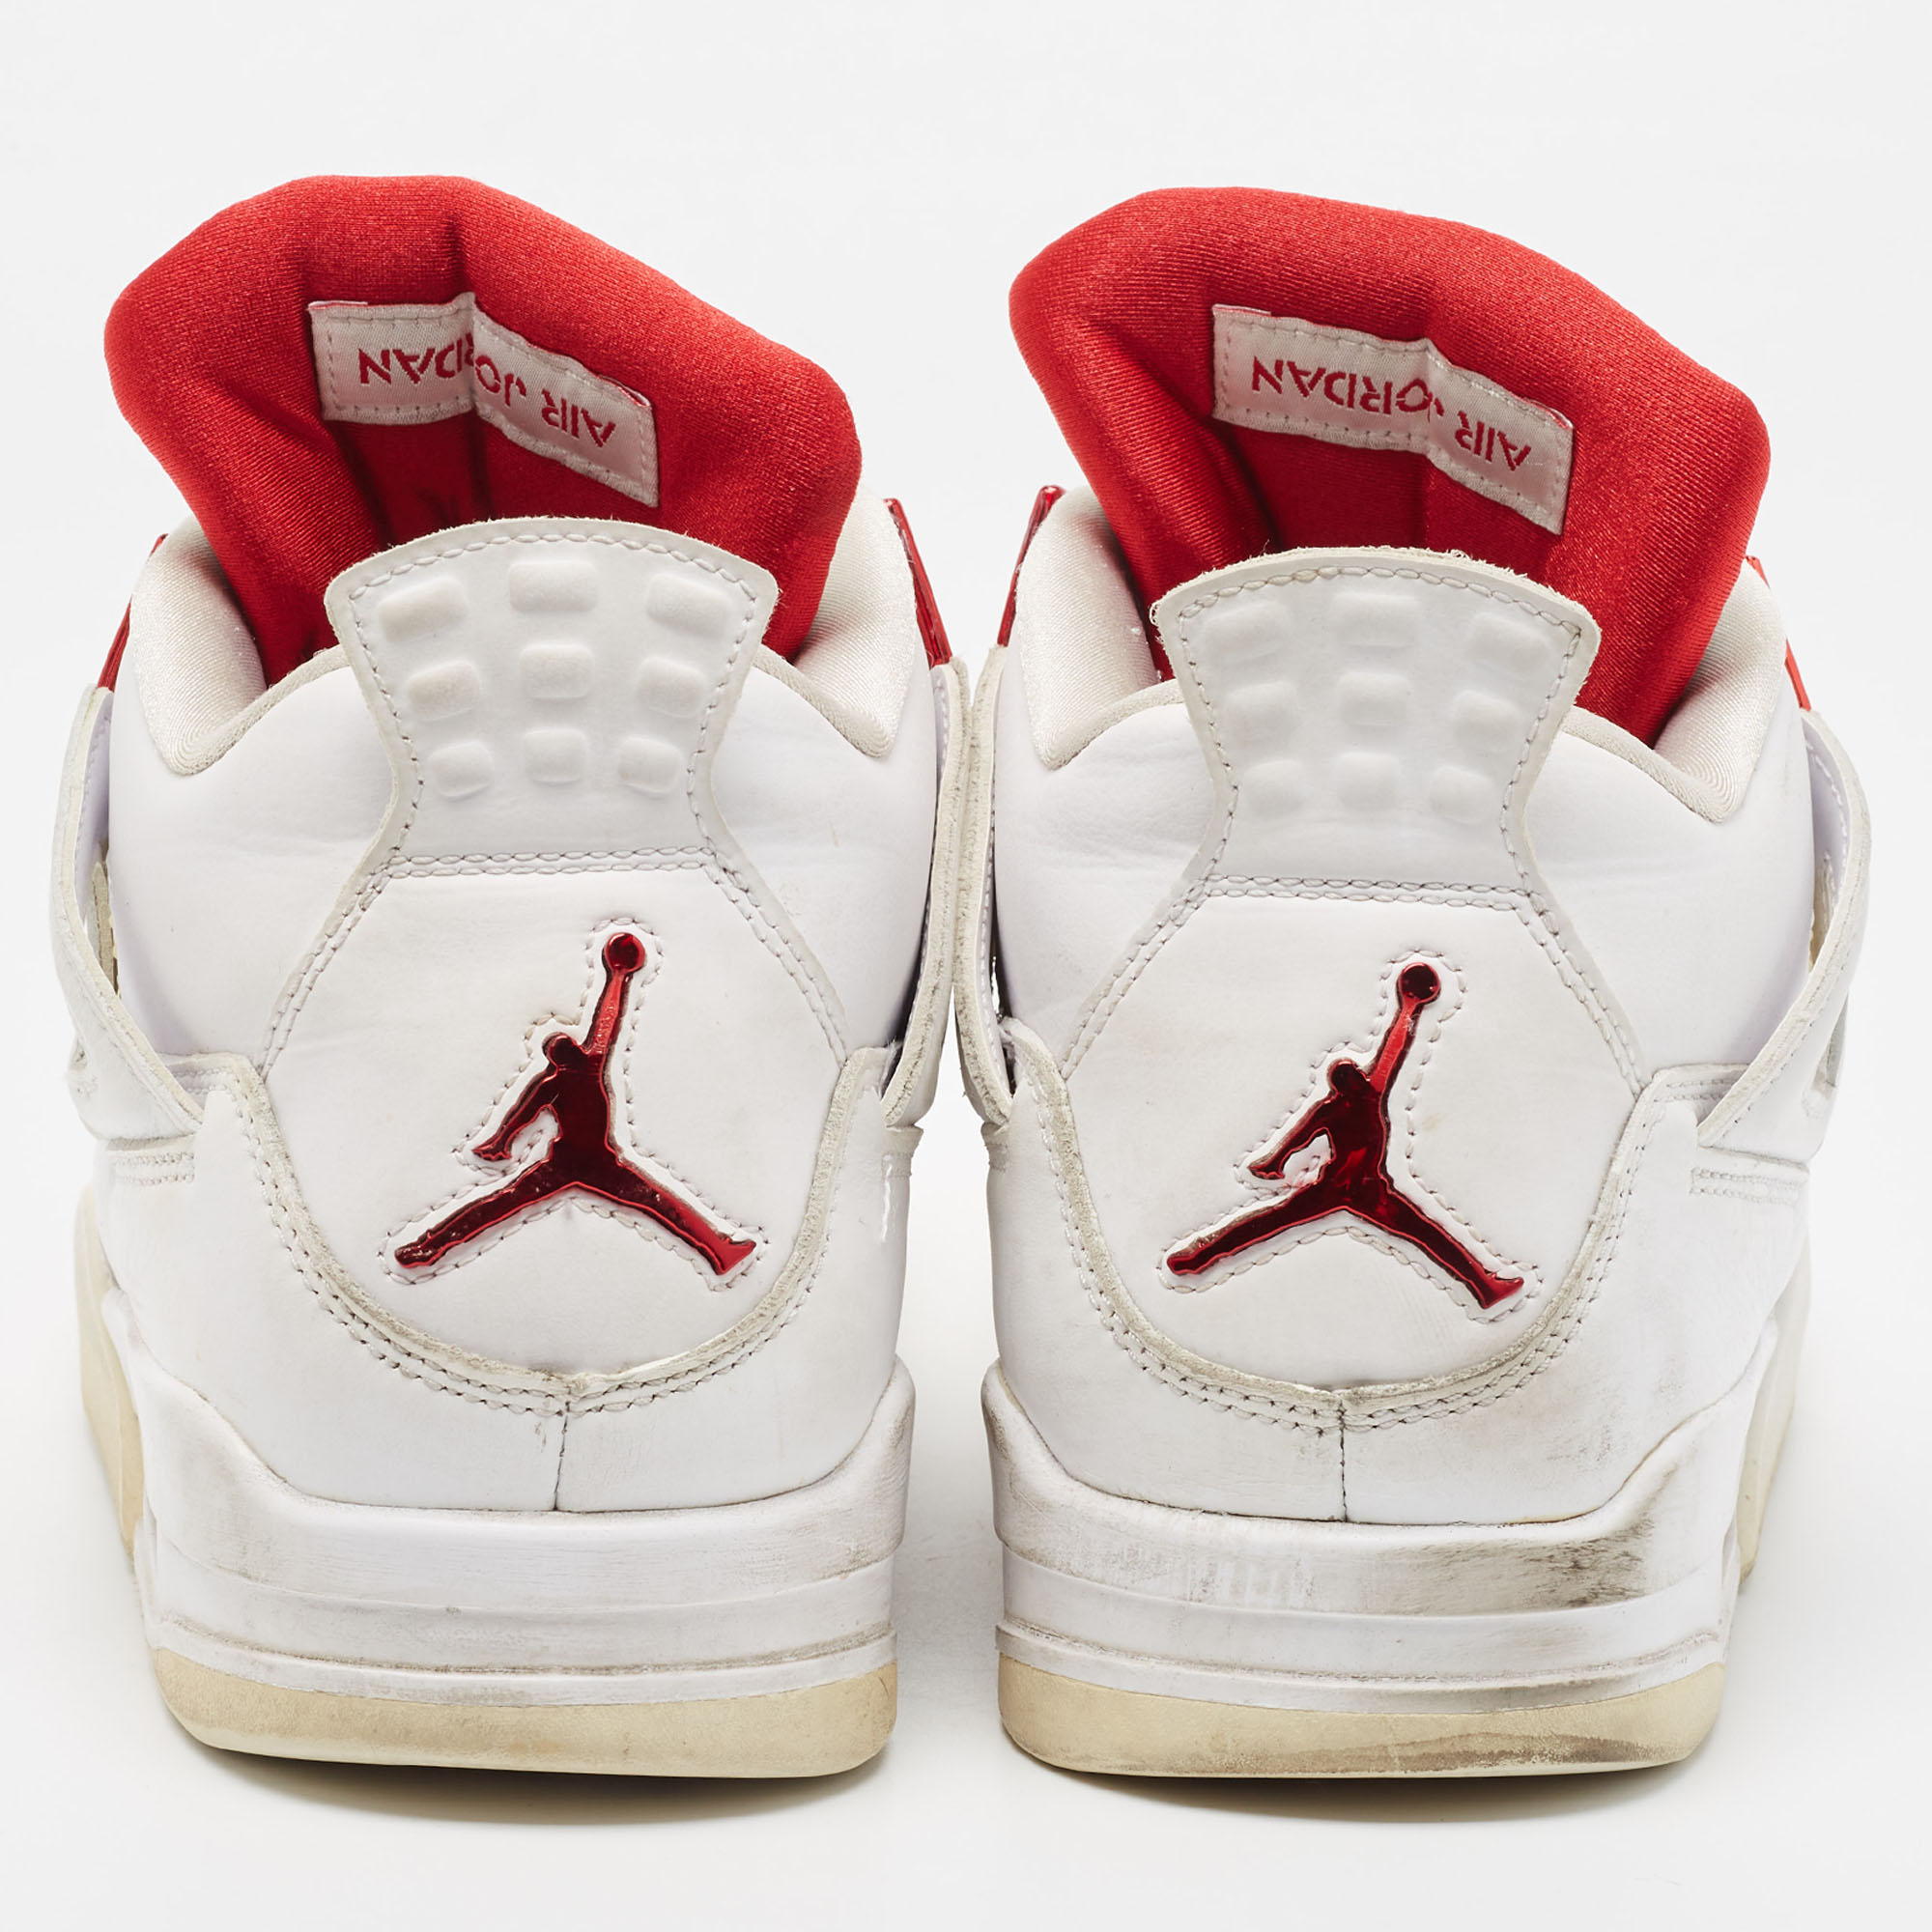 Air Jordans White Leather Jordan 4 Retro Sneakers Size 43